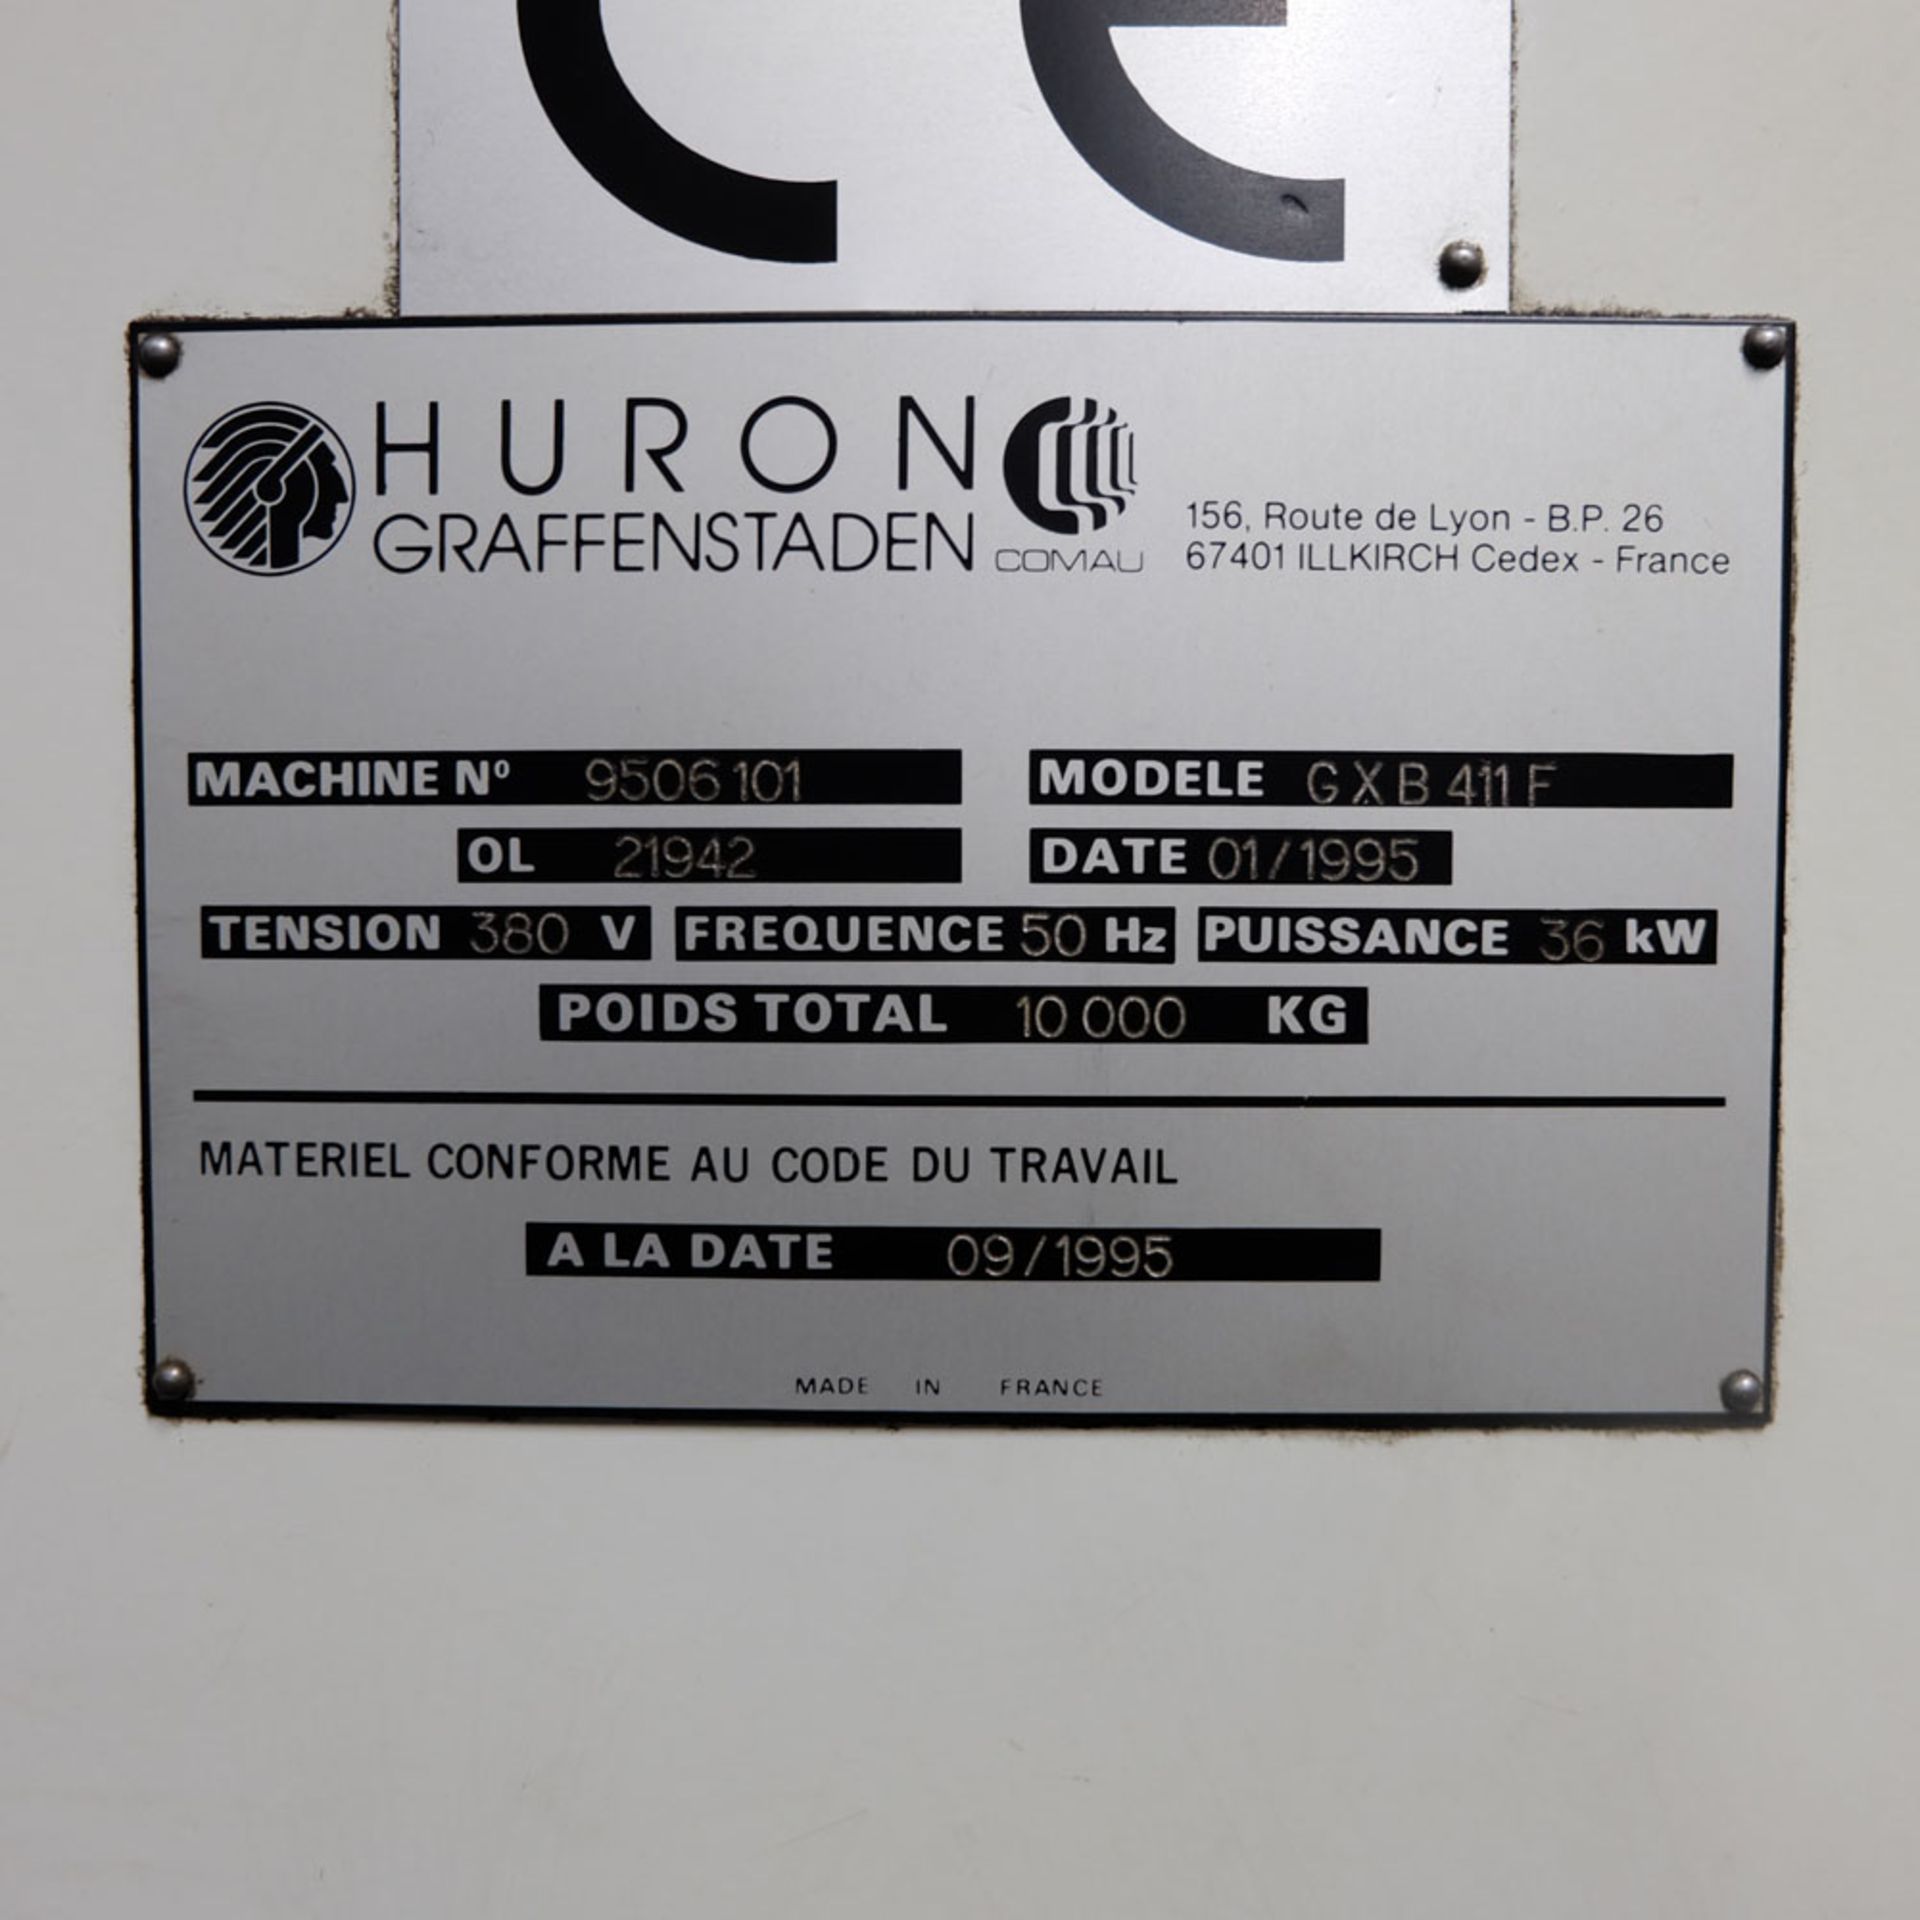 Huron GX 411 F Bed Type Milling Machine. Control Unit: HEIDENHAIN TNC 415B. - Image 10 of 12